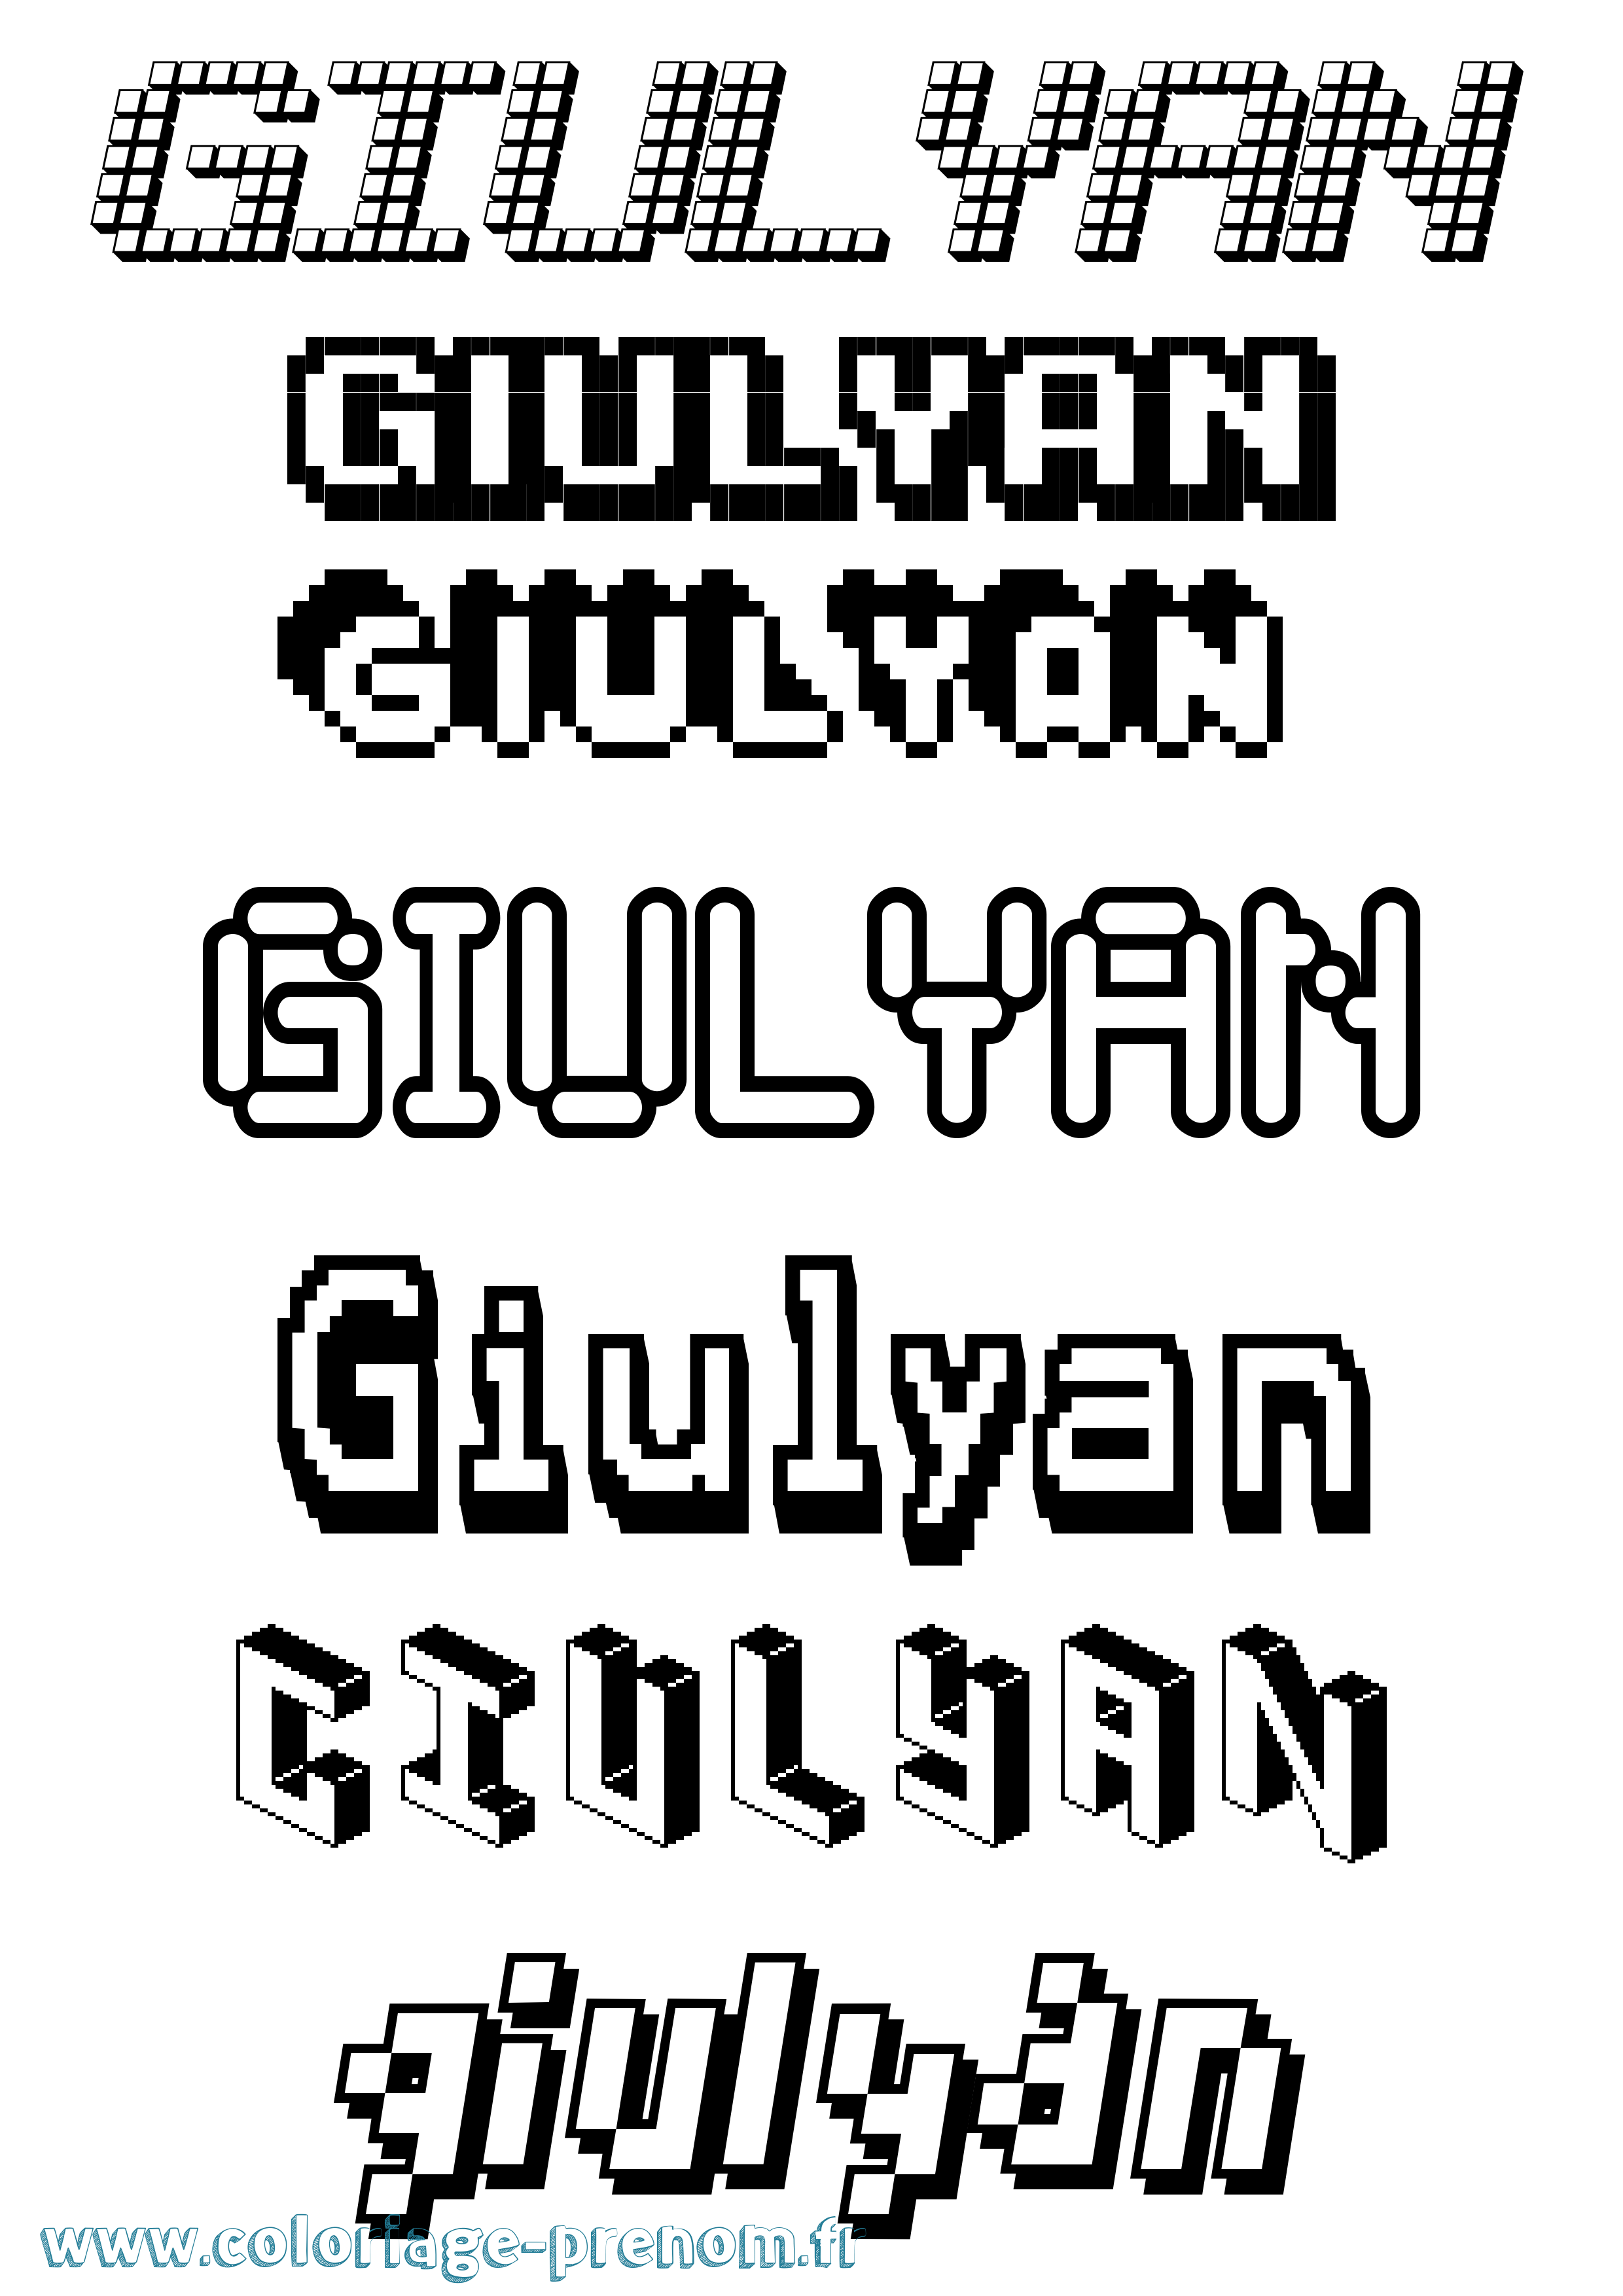 Coloriage prénom Giulyan Pixel